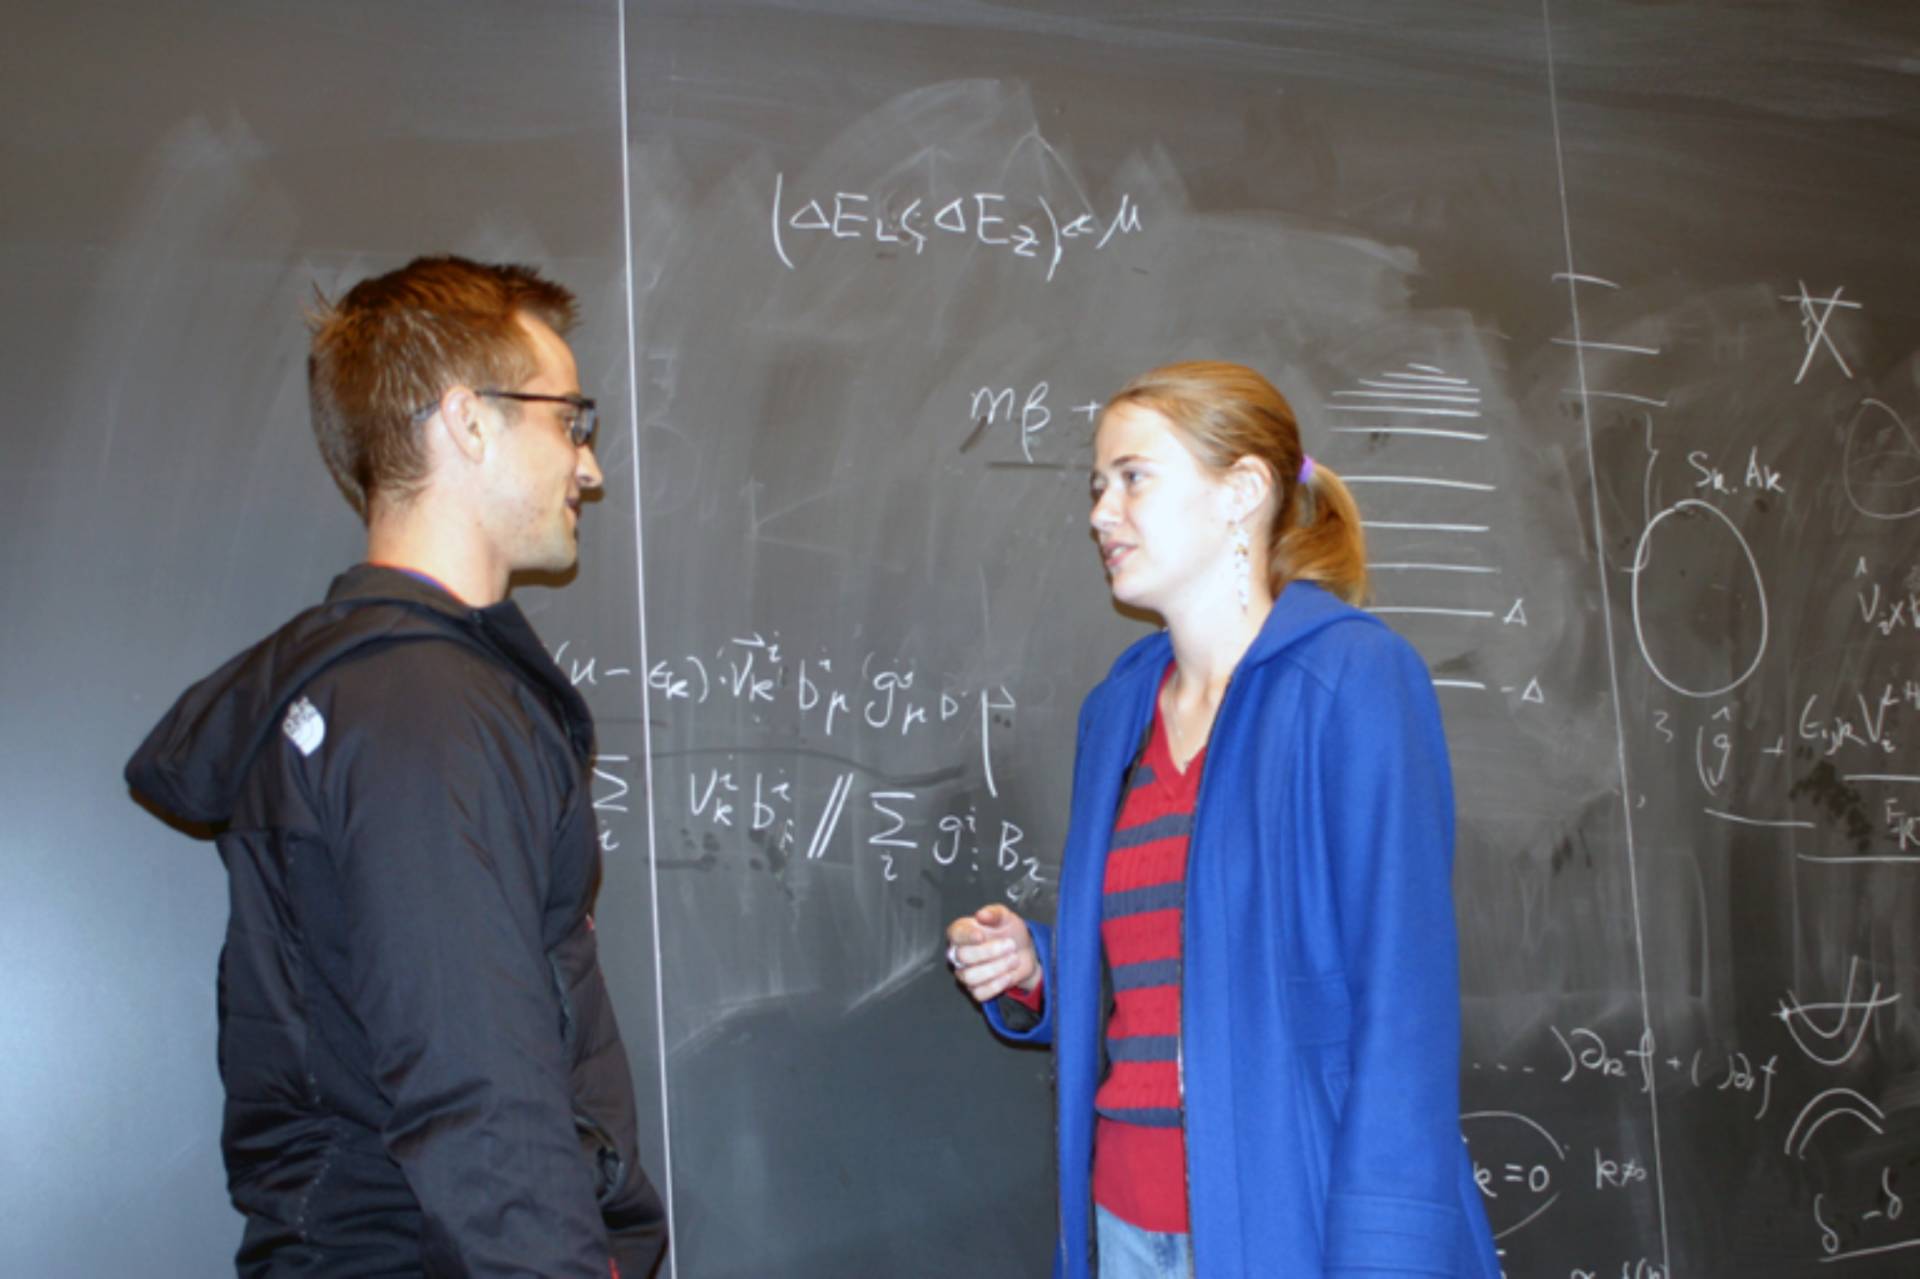 Ksenia Sokolova and Ryan Manzuk speak in front of a chalk board